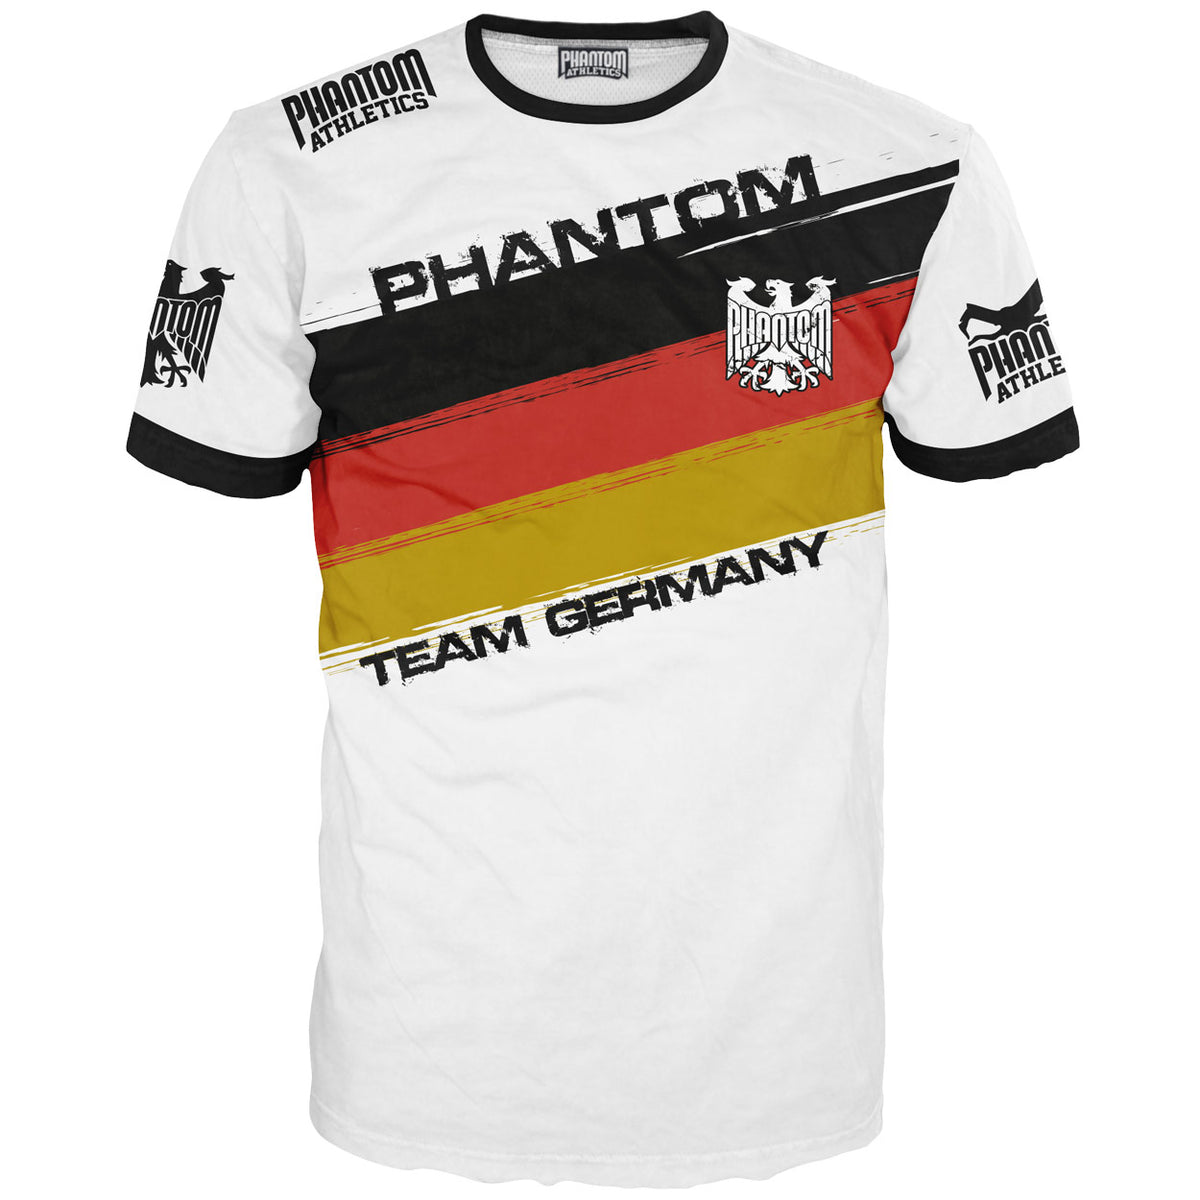 PHANTOM ATHLETICS - camiseta de entrenamiento evo alemania